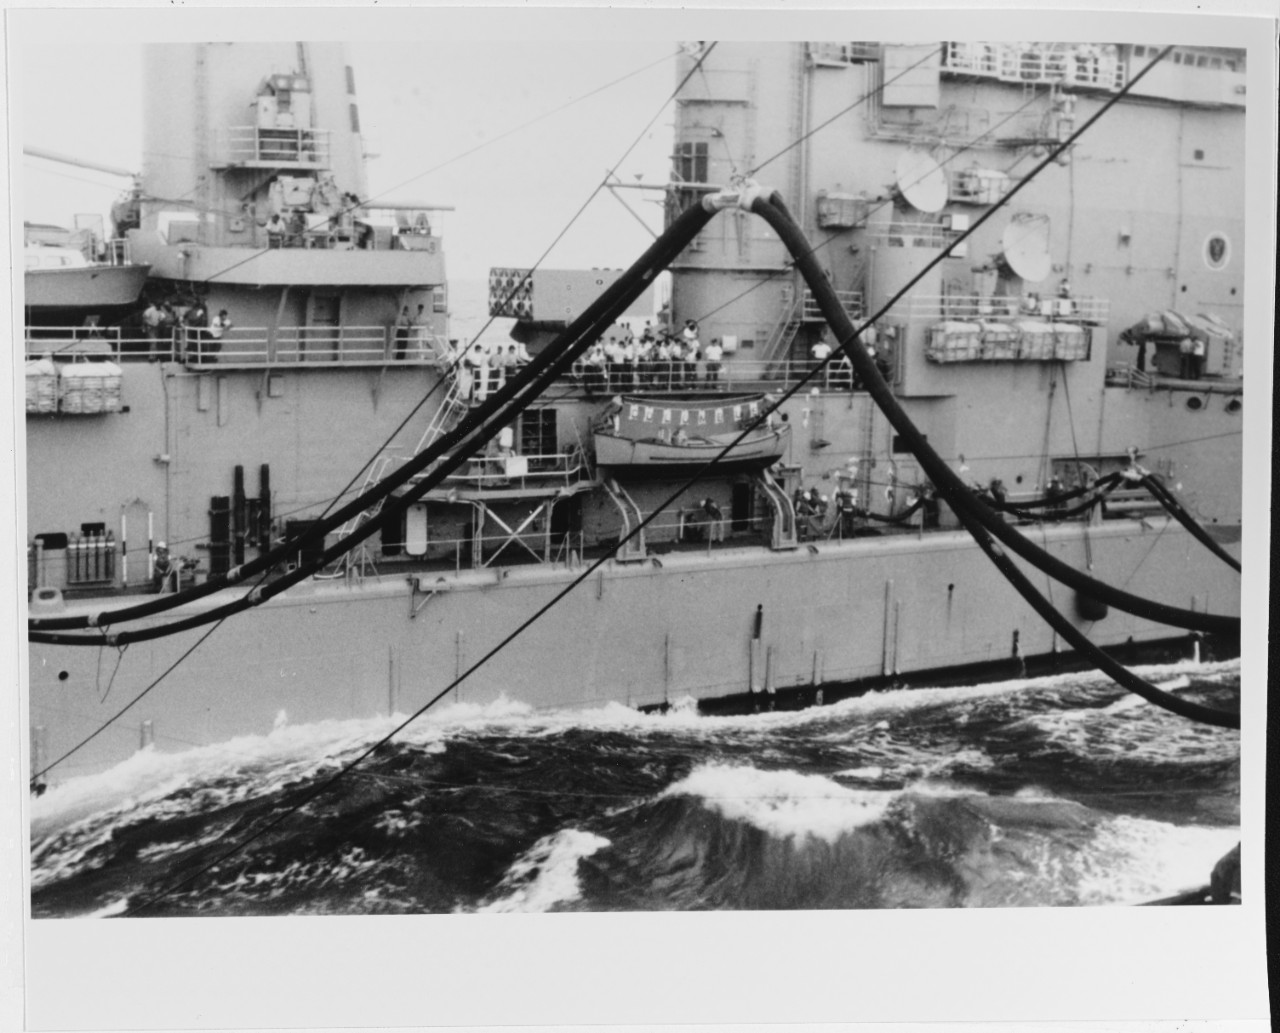 USN Navy USS COLUMBUS CG 12 Naval Ship Photo Print 